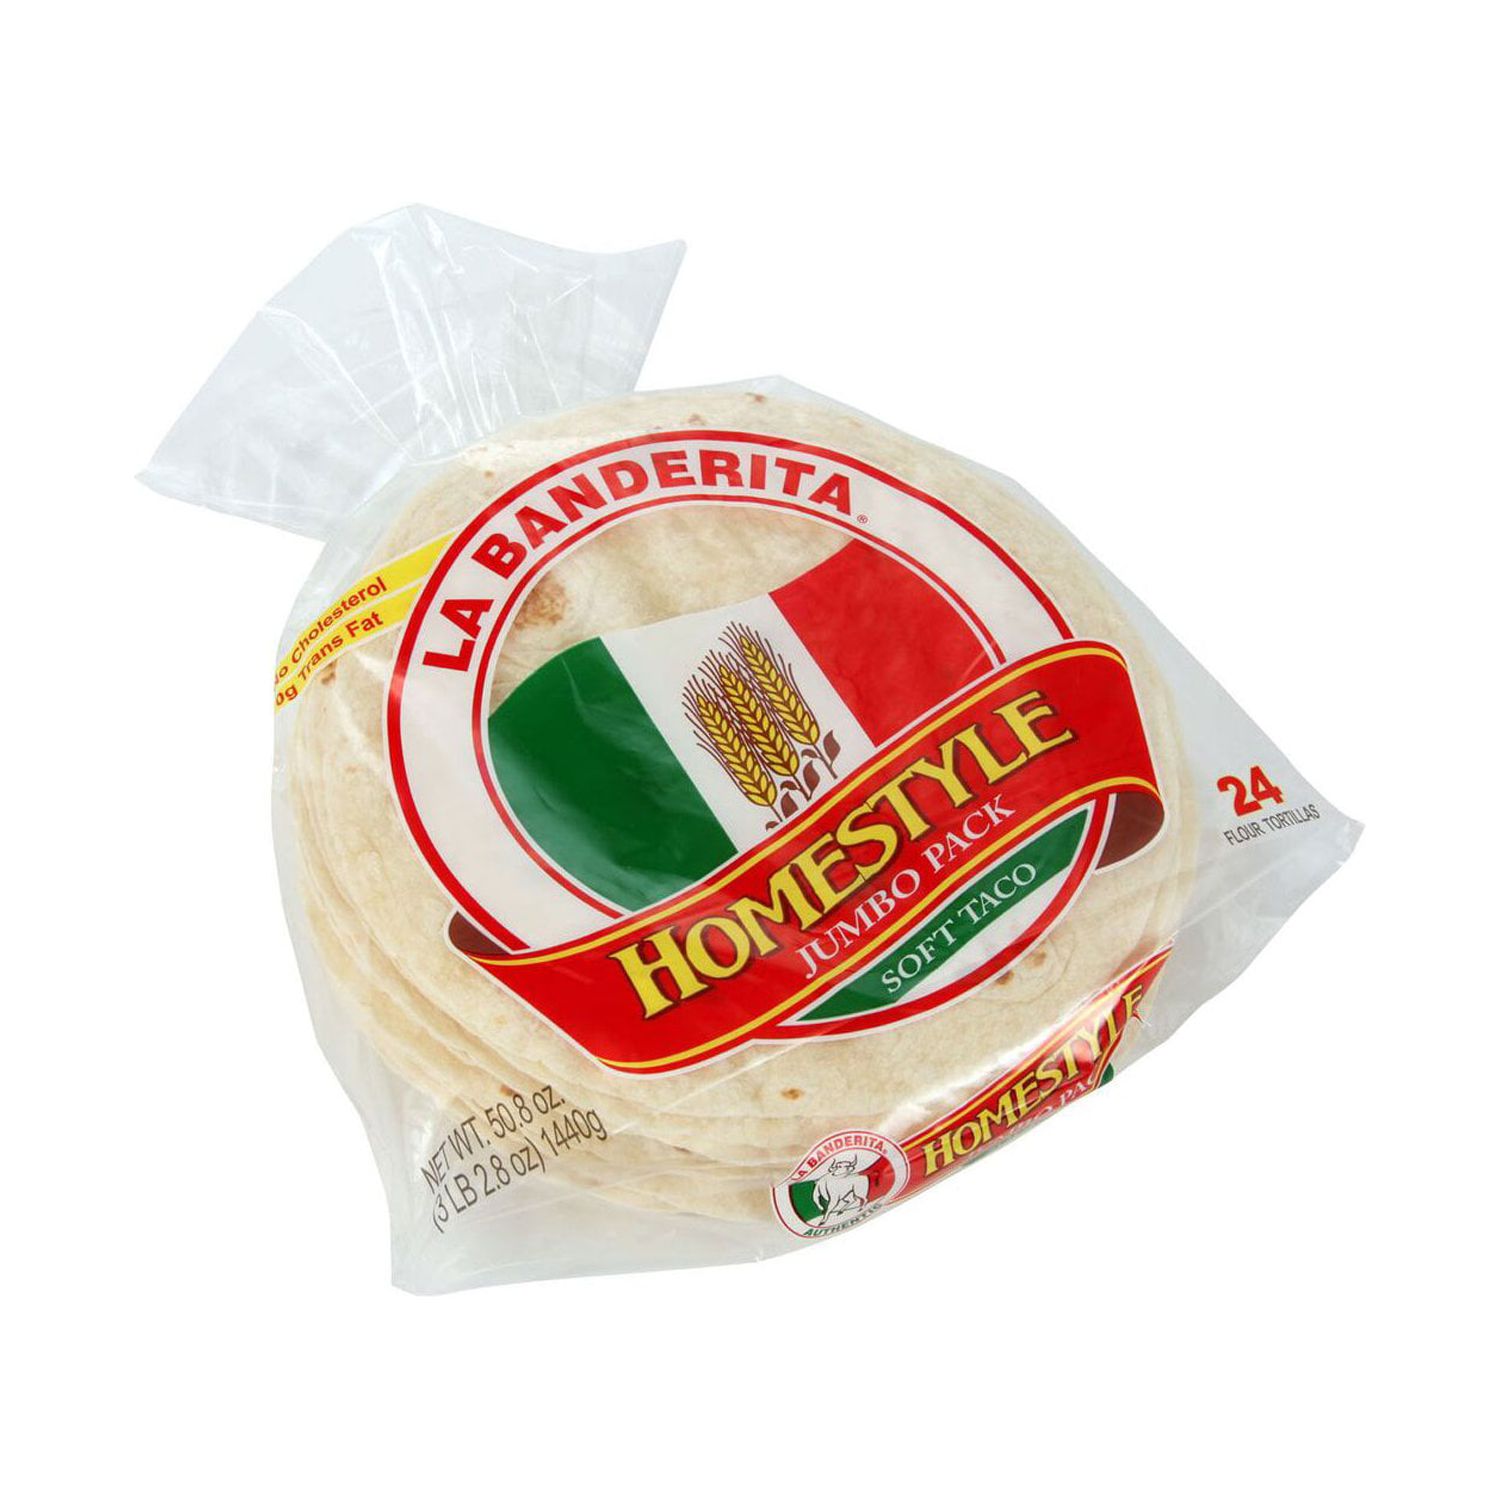 La Banderita Homestyle Tortillas, 24 ct Jumbo Pack, Soft Taco - image 2 of 6